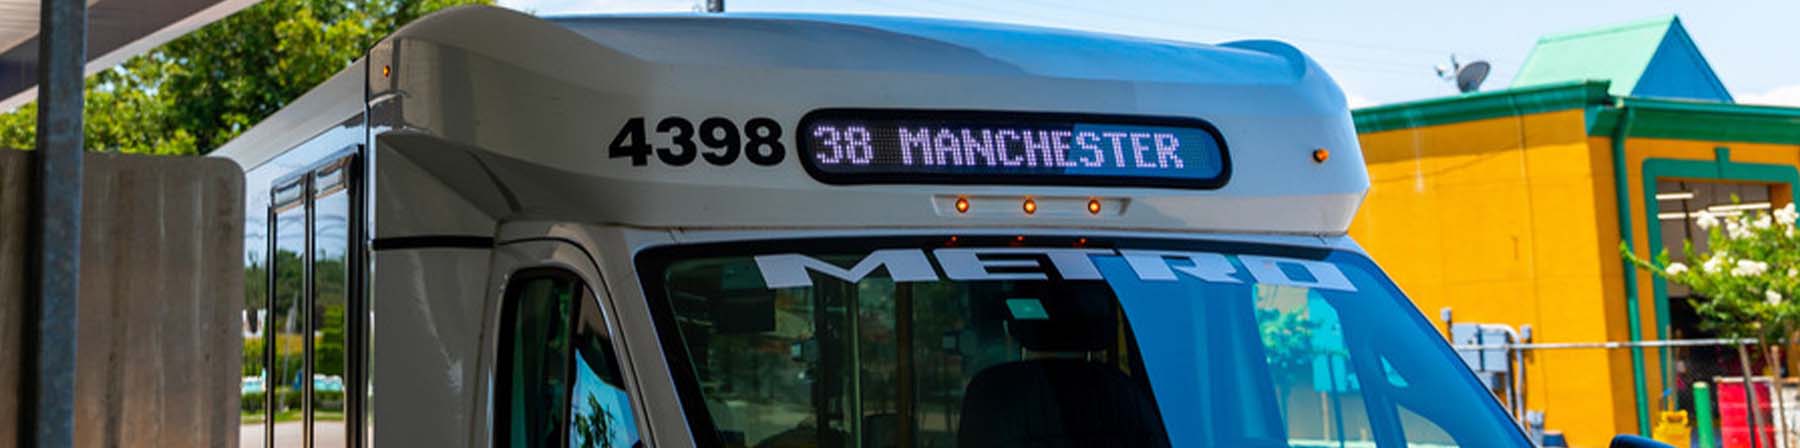 38 Manchester-Lawndale shuttle bus